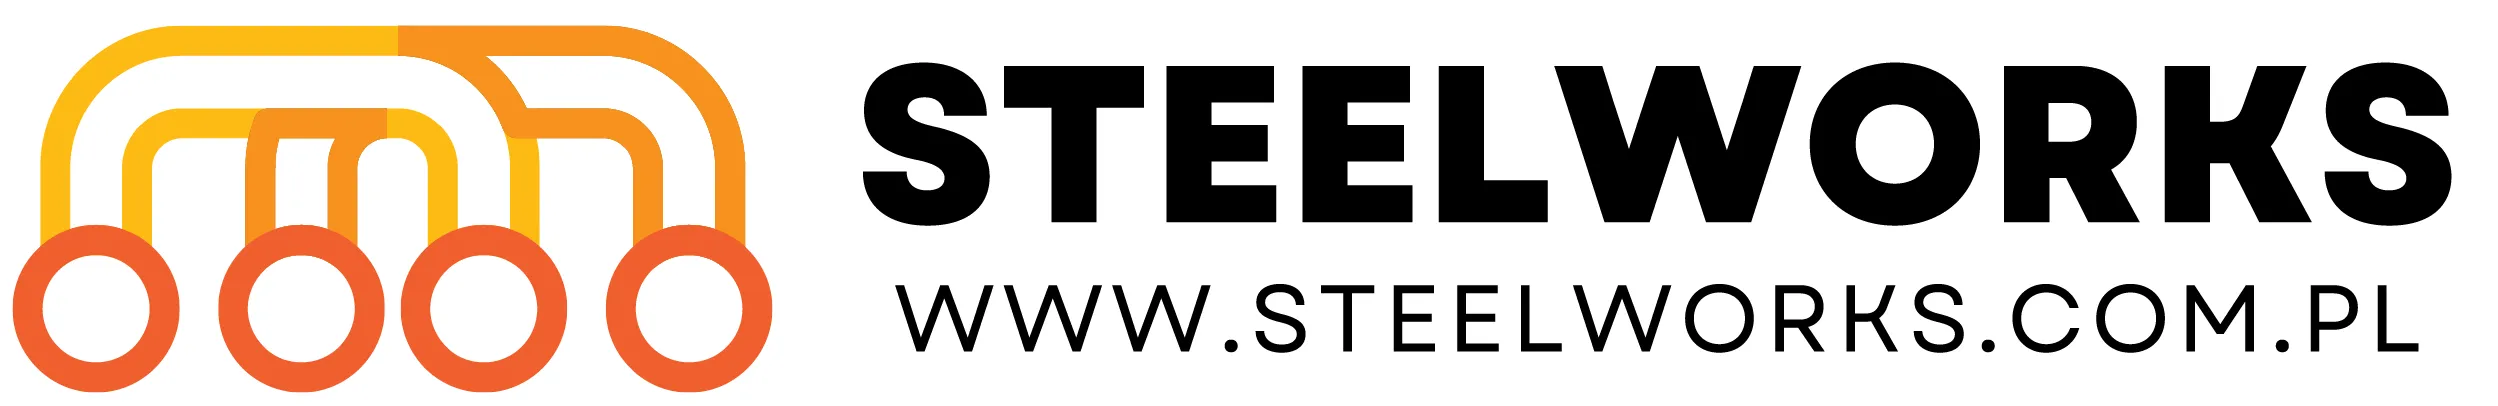 steelworks.com.pl